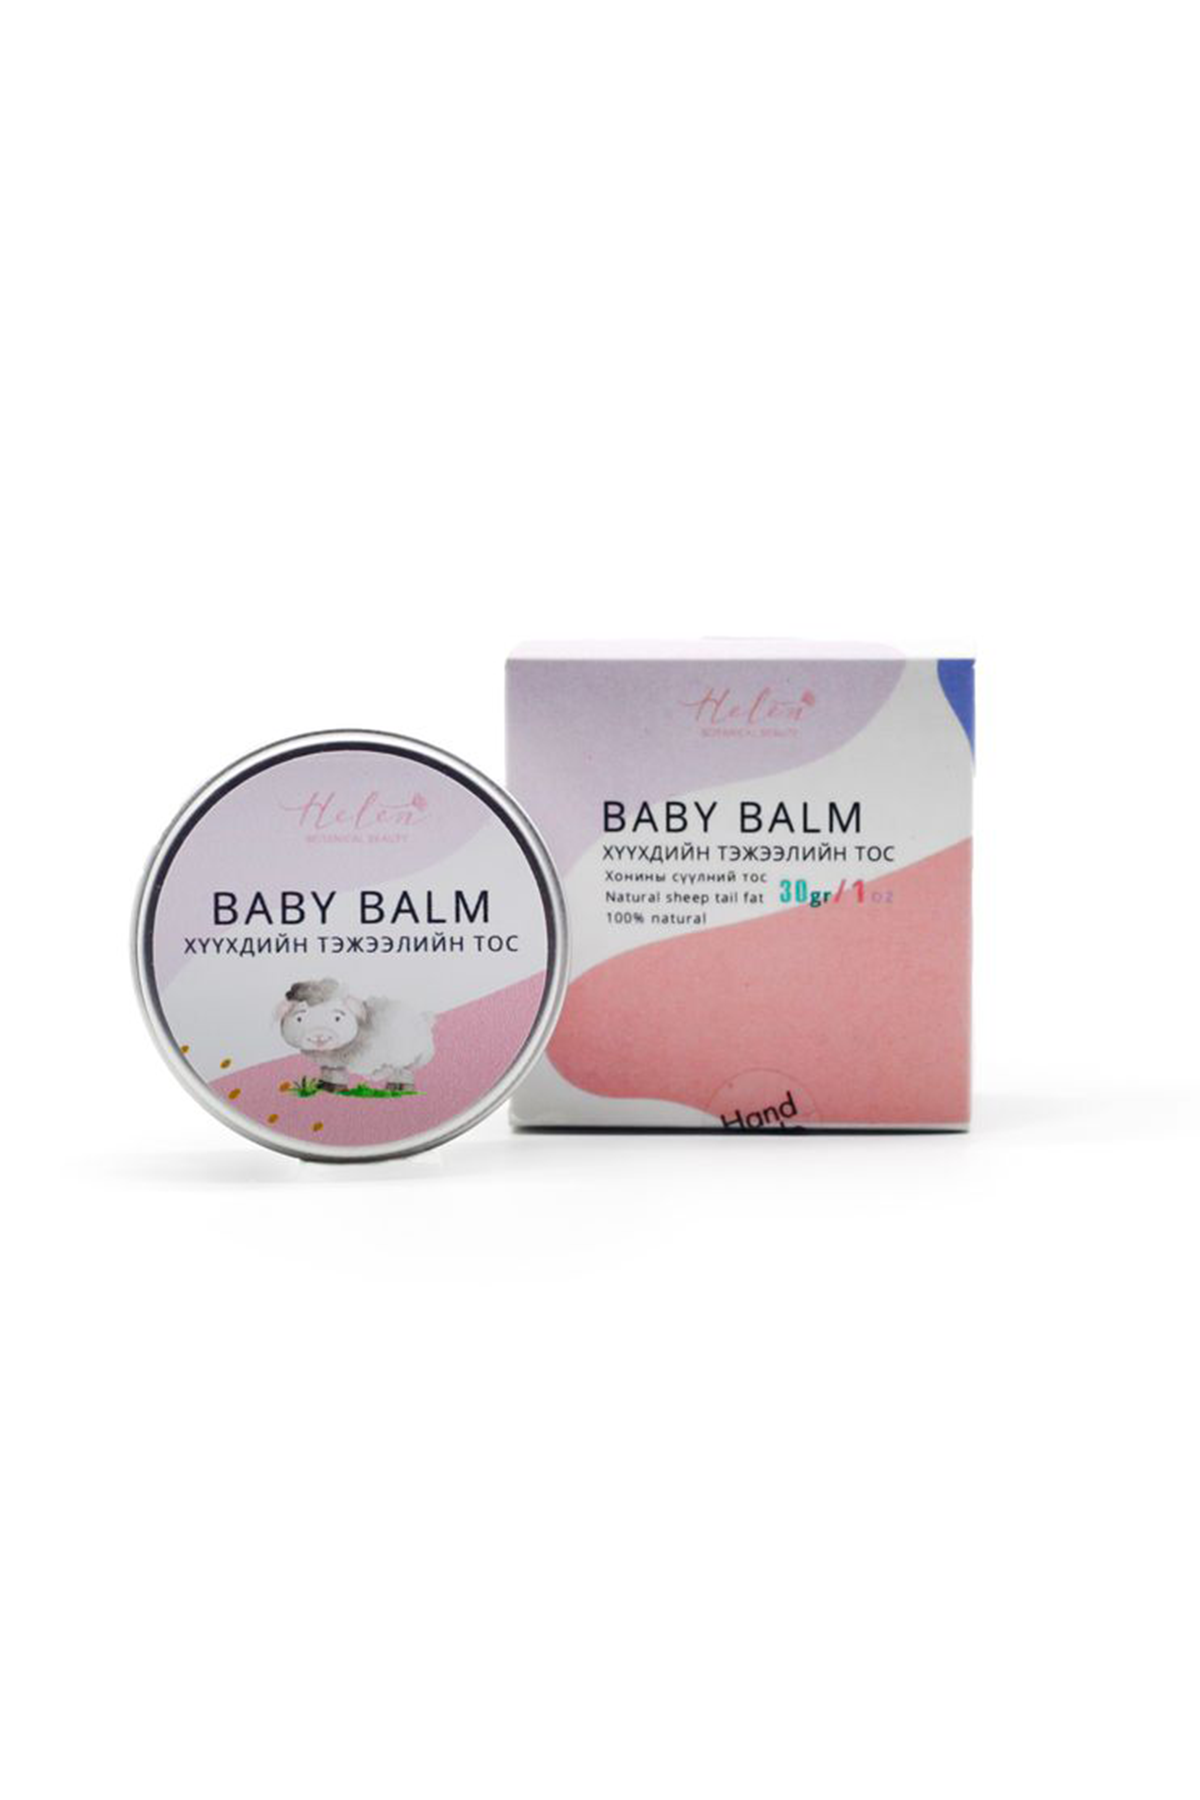 Handmade organic baby balm made with natural sheep tail fat. Perfect for skin irritation, diaper rash